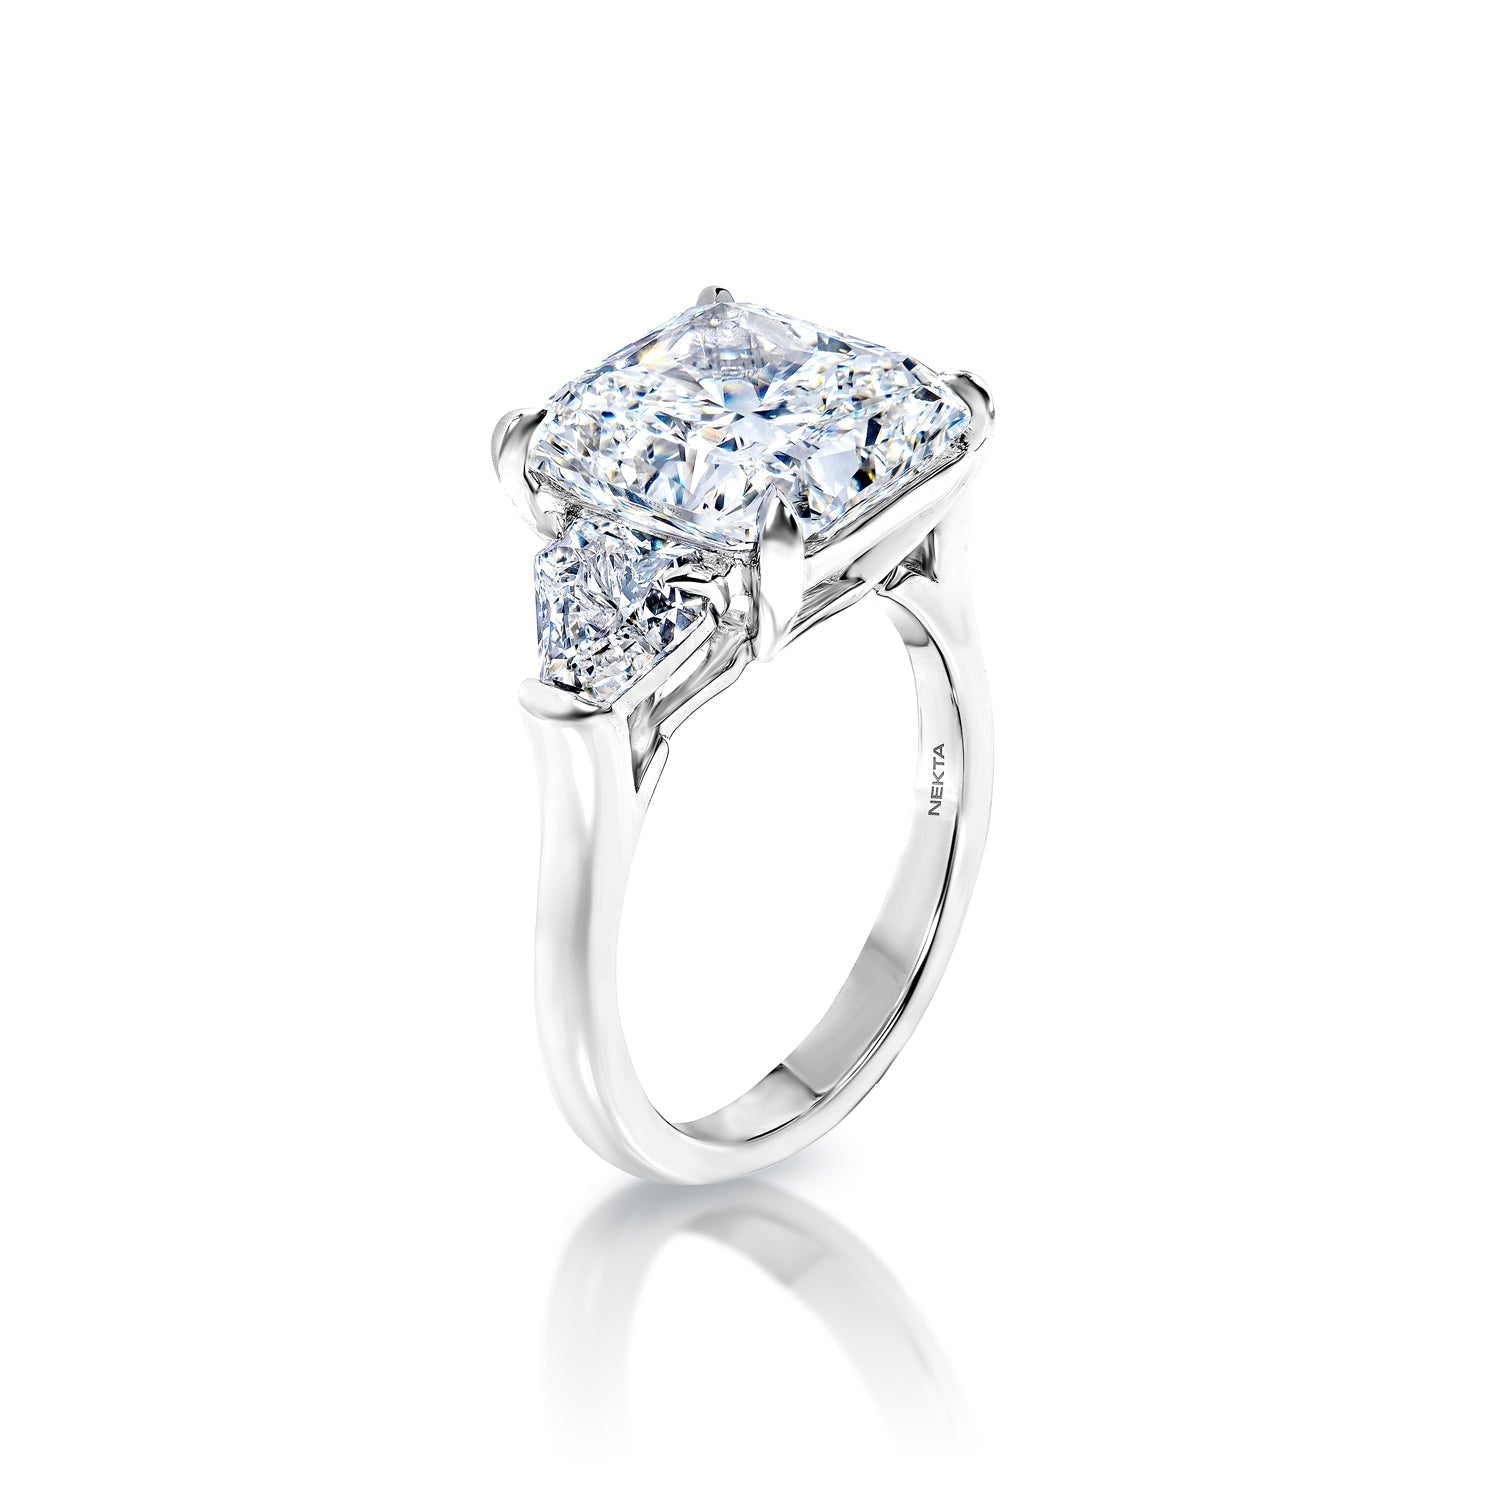 Larine 9 Carat G VS1 Radiant Cut Diamond Engagement Ring in Platinum. IGI Certified SIde View